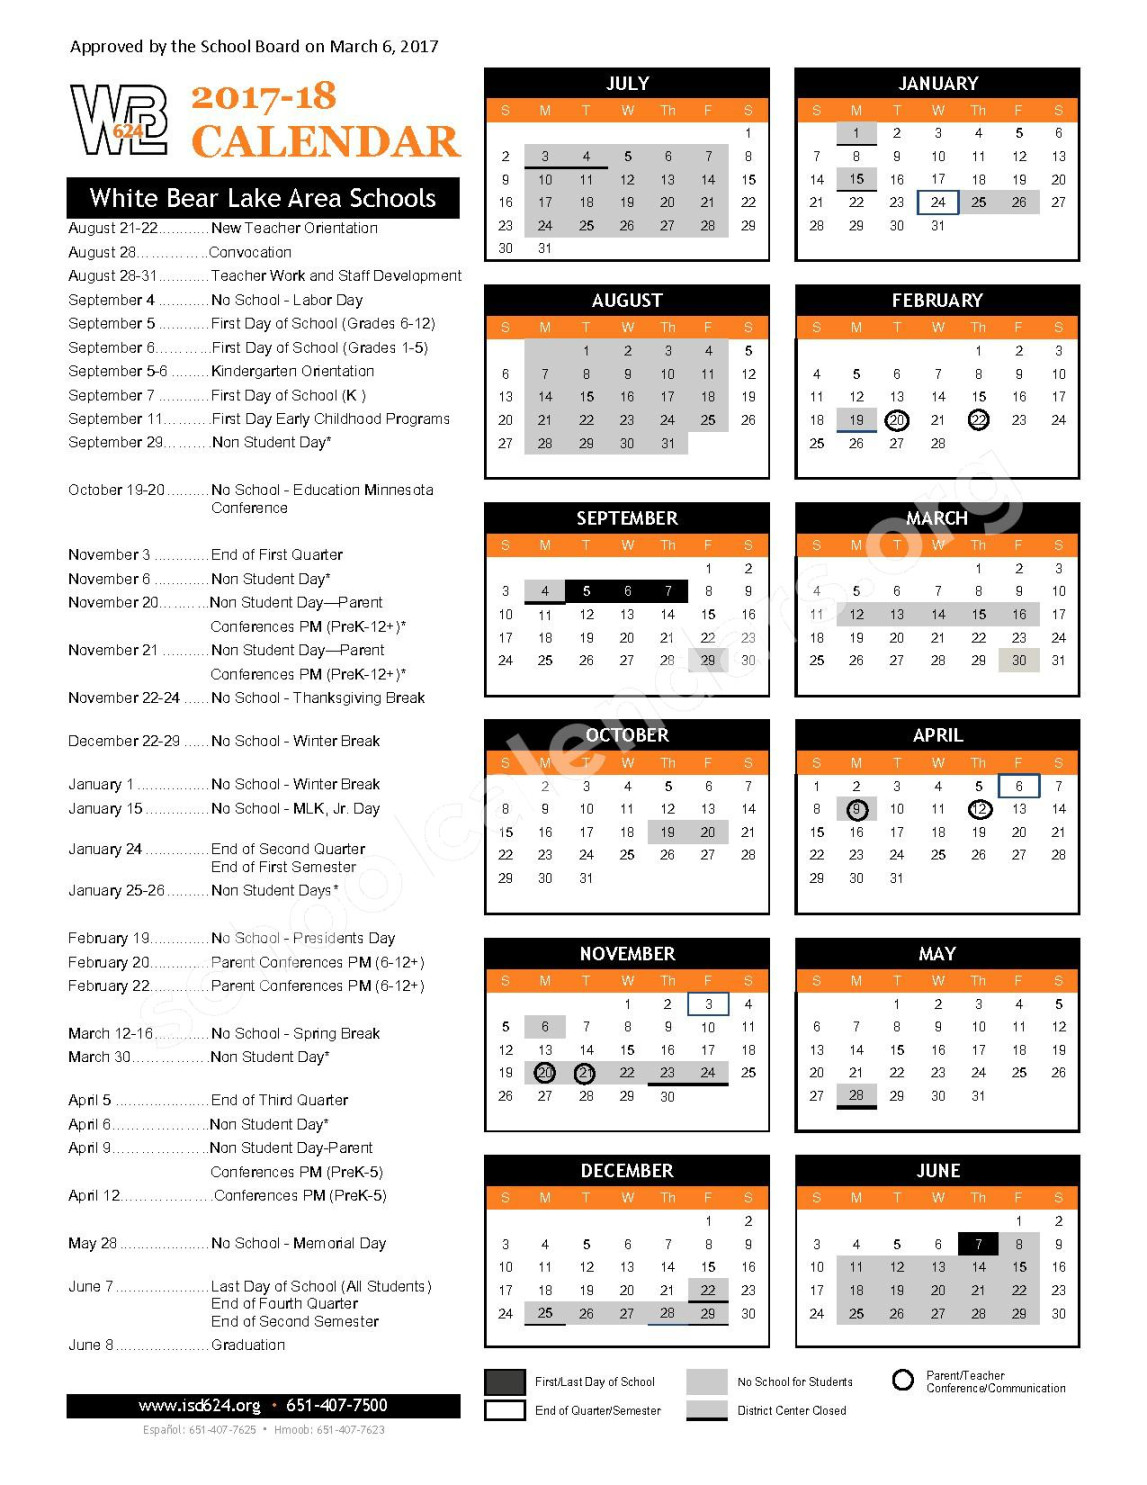 White Bear Lake Calendar